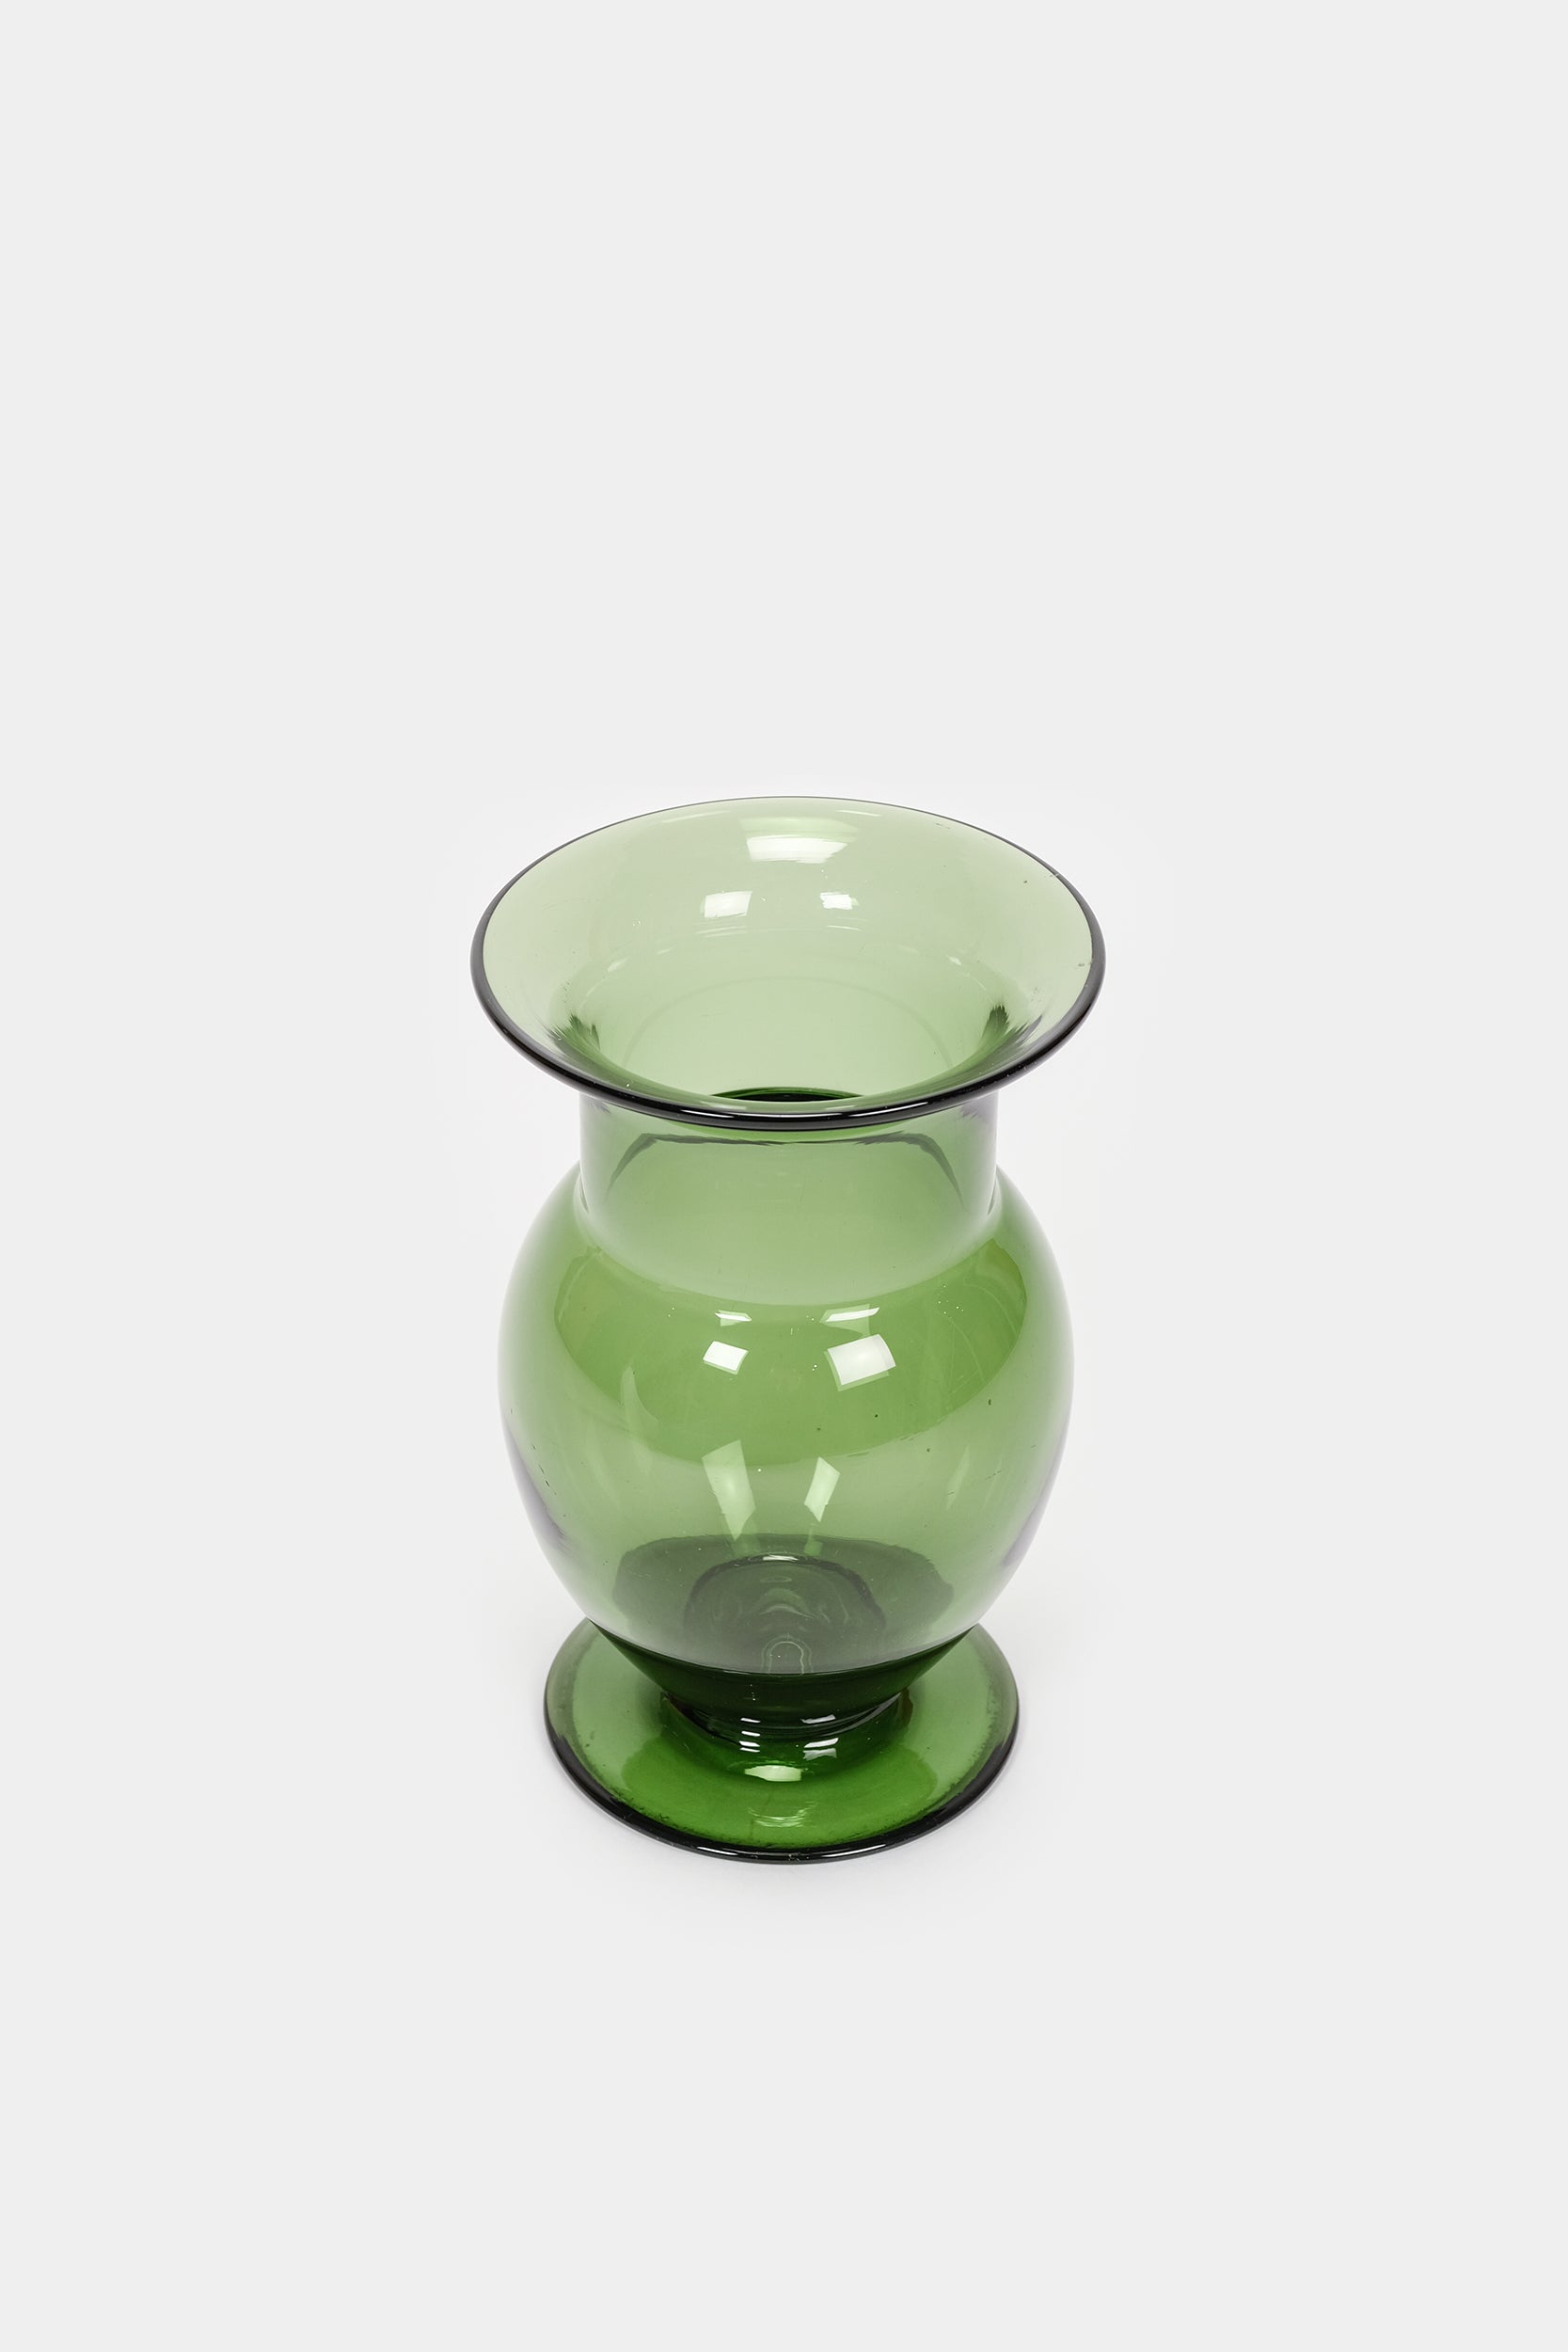 Vetro Verde D'Empoli, klassizistische Vase, 40er